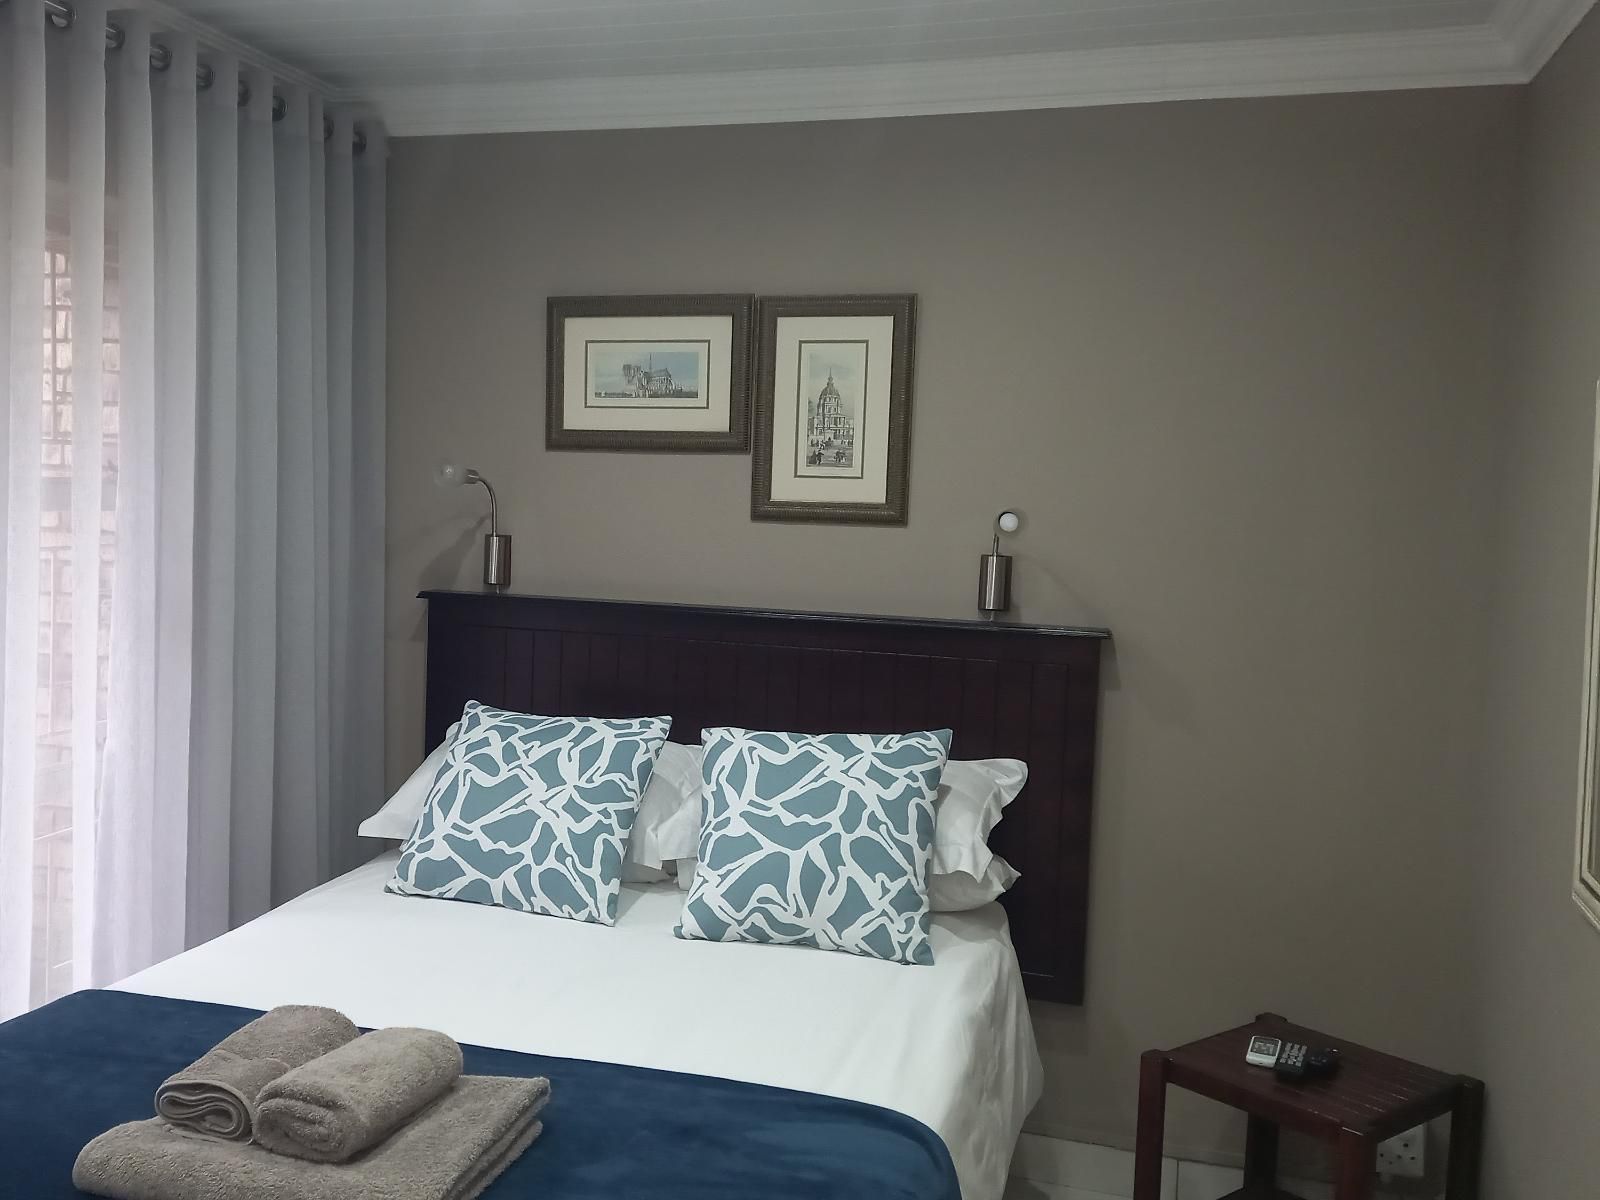 Dormio Manor Guest Lodge Secunda Mpumalanga South Africa Unsaturated, Bedroom